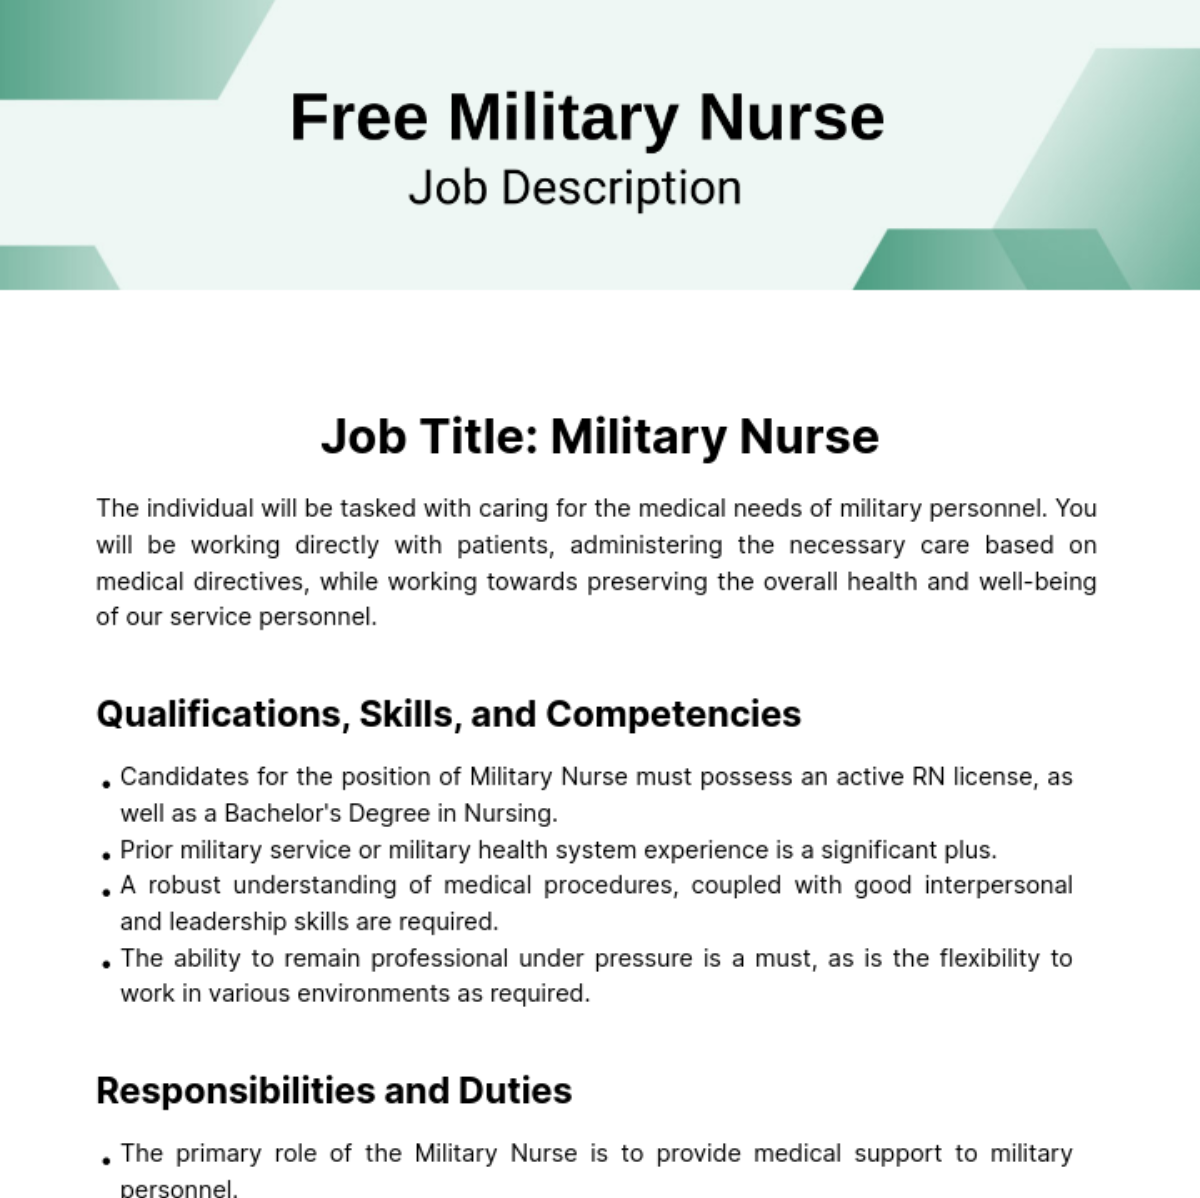 Free Military Nurse Job Description Template